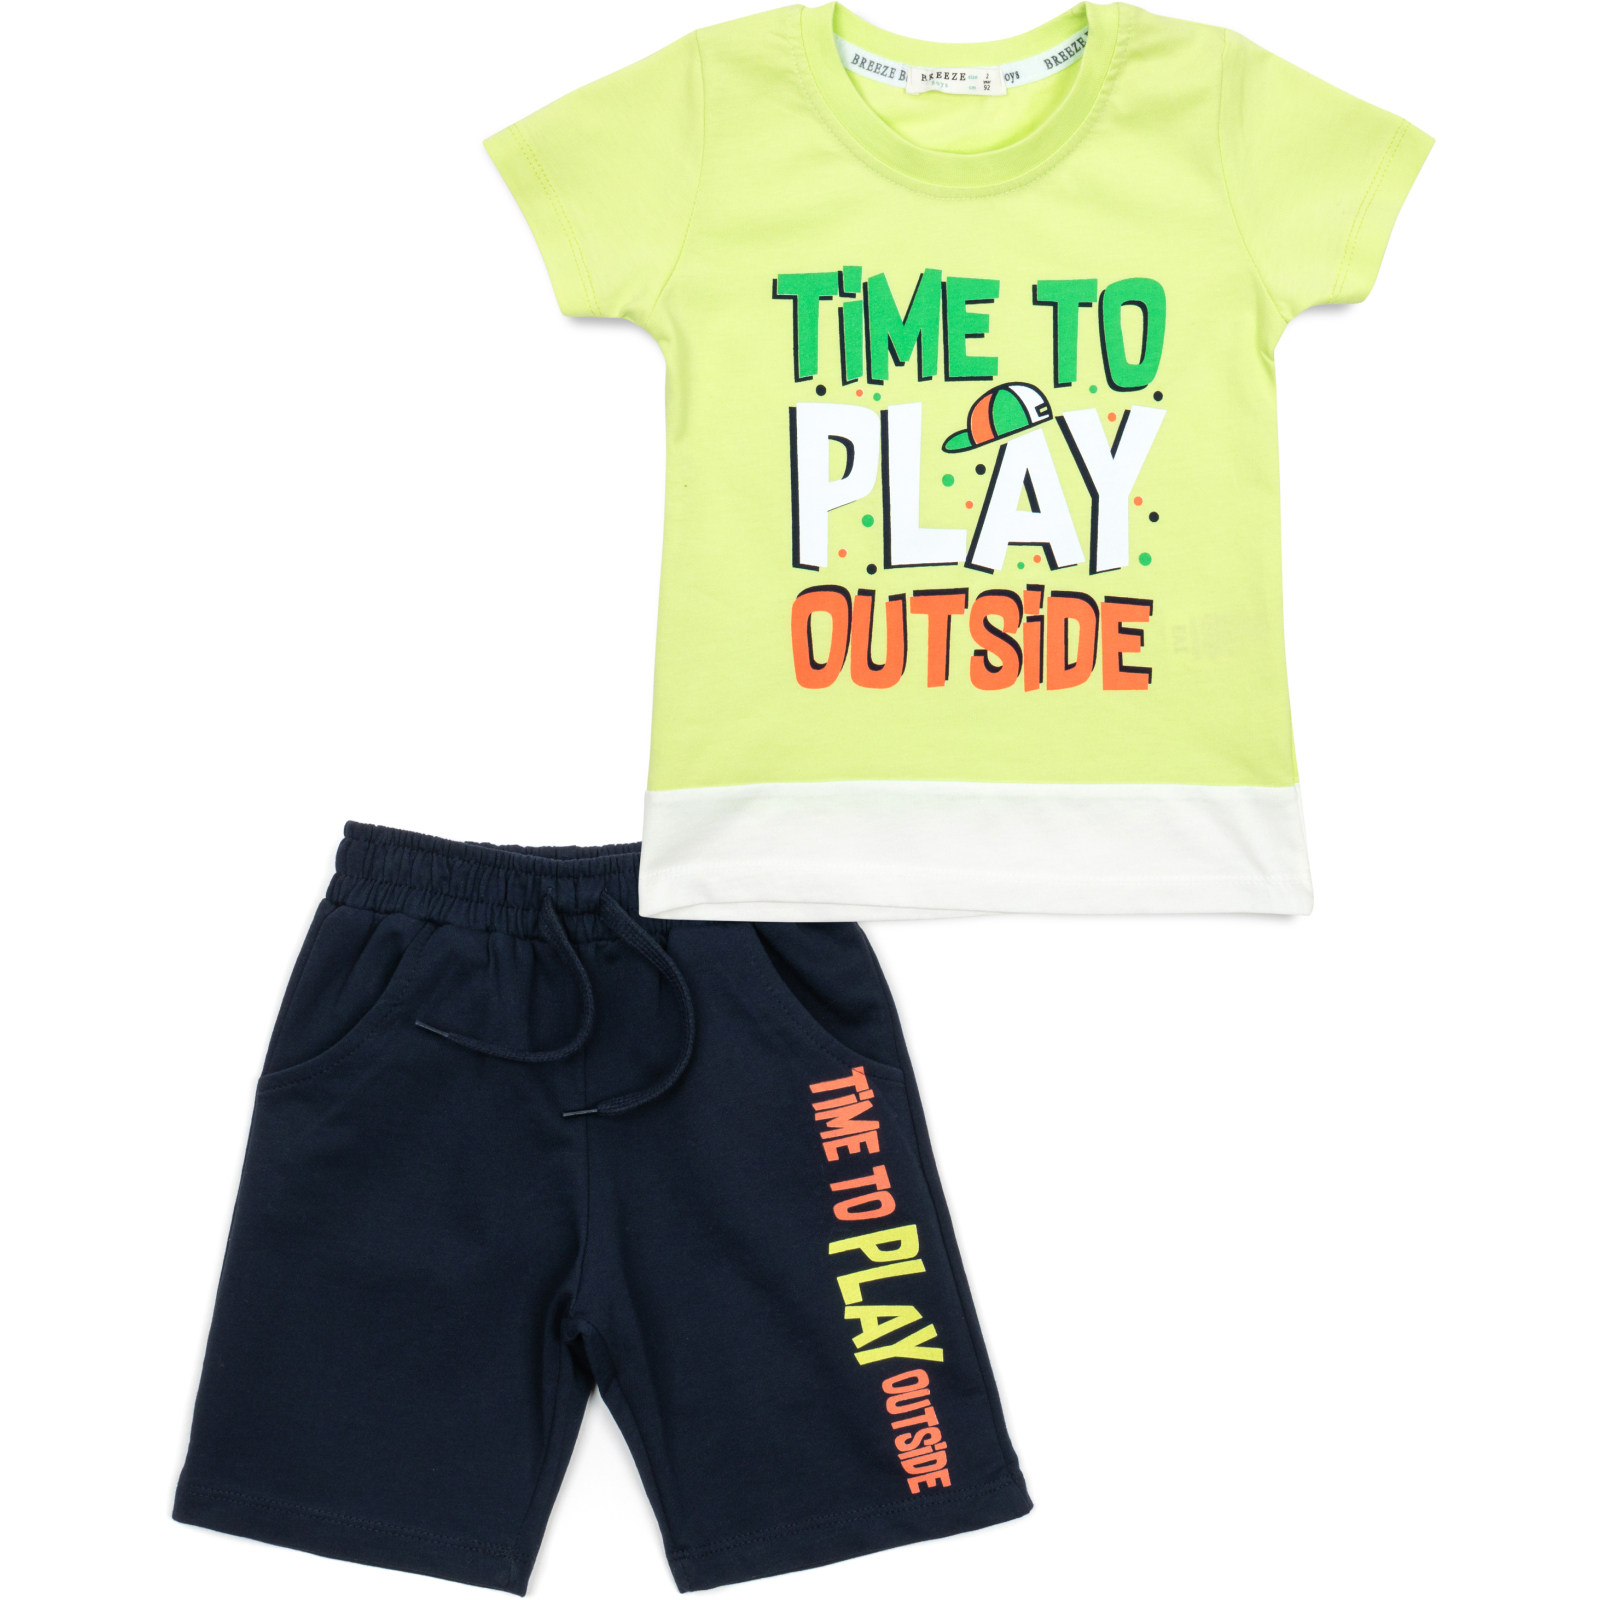 Набор детской одежды Breeze TIME TO PLAY OUTSIDE (14591-104B-green)